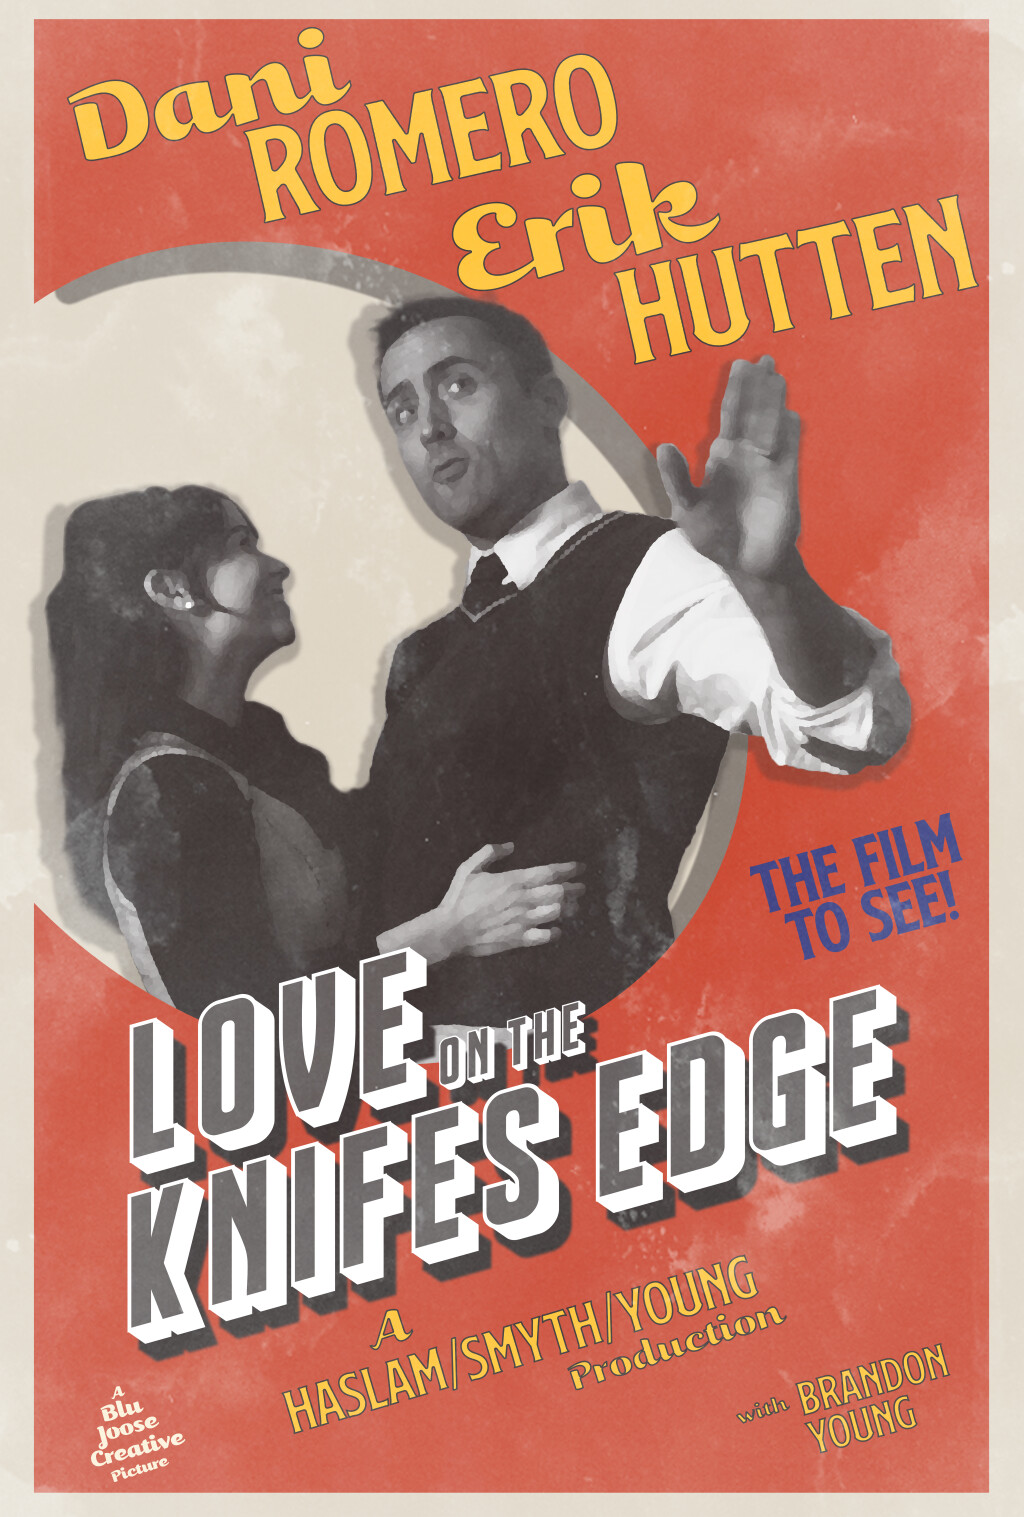 Filmposter for Love on the Knife's Edge